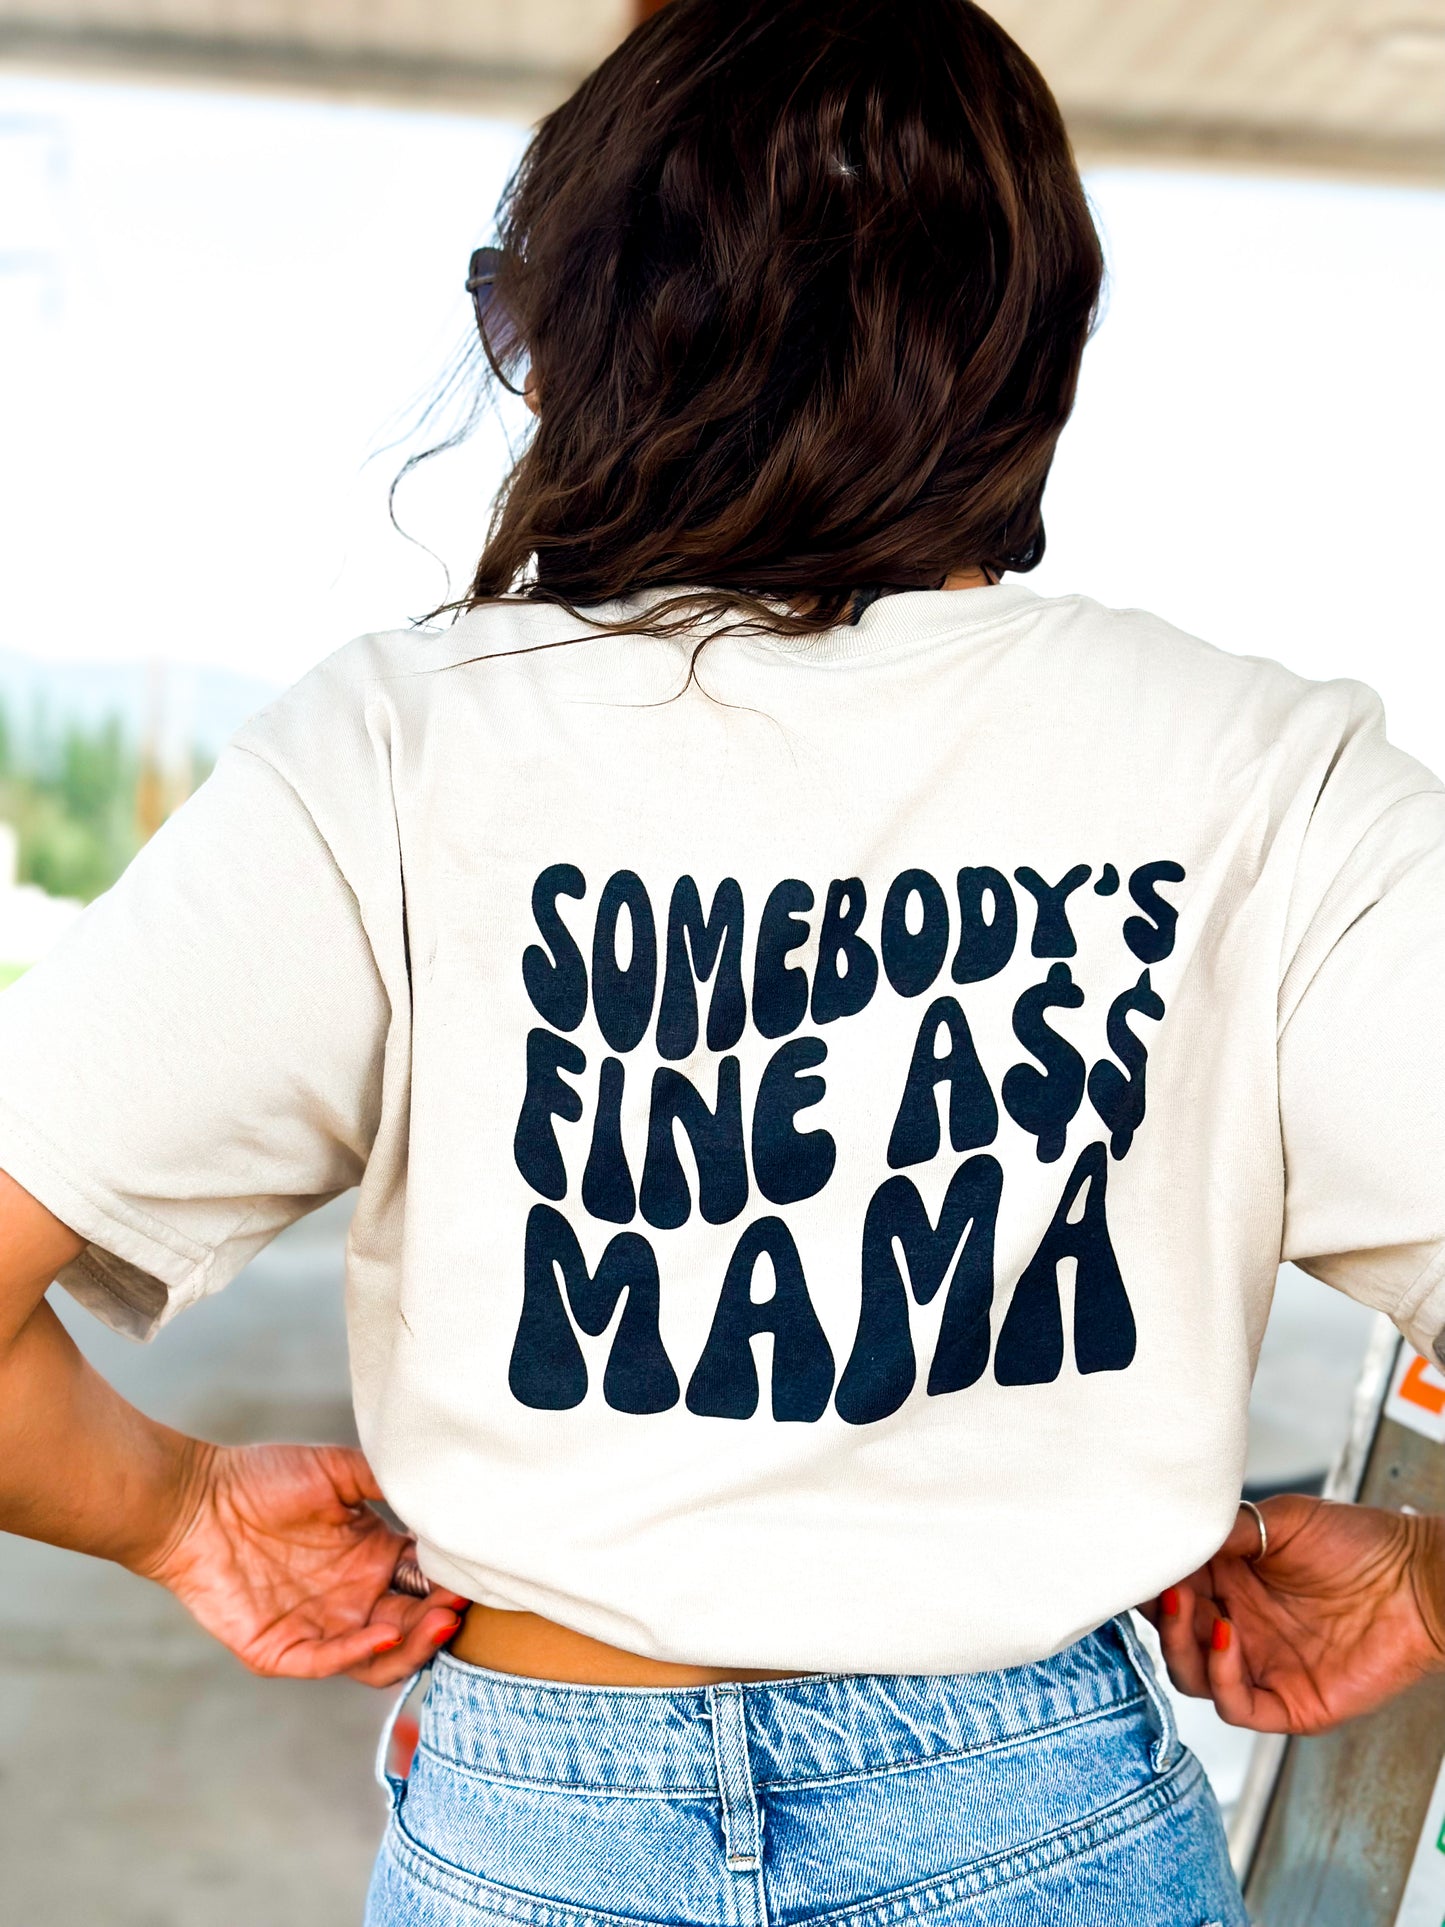 Somebody’s Fine Ass Mama Tee